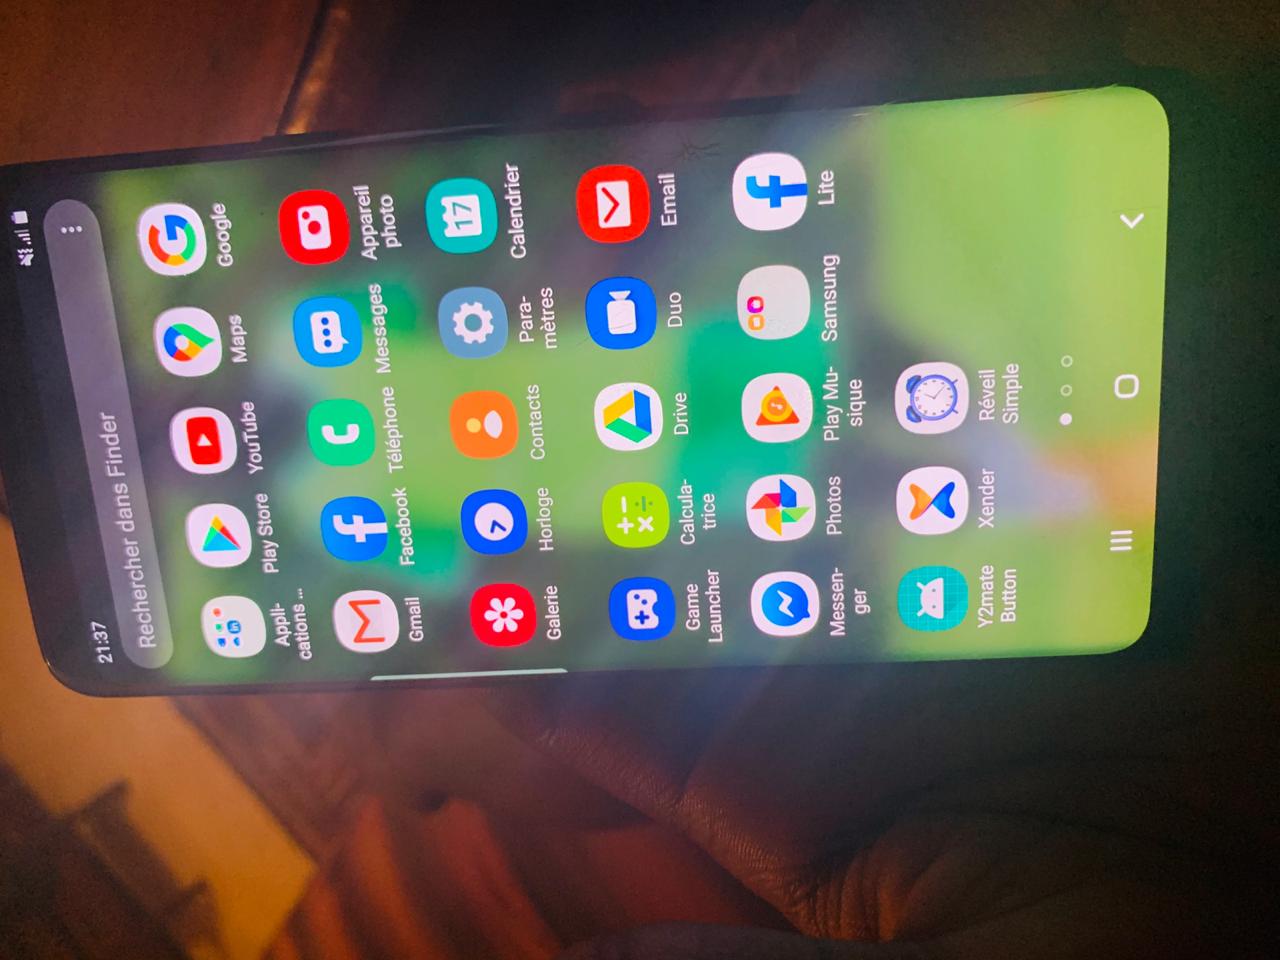 Samsung S9 Go64 tout neuf